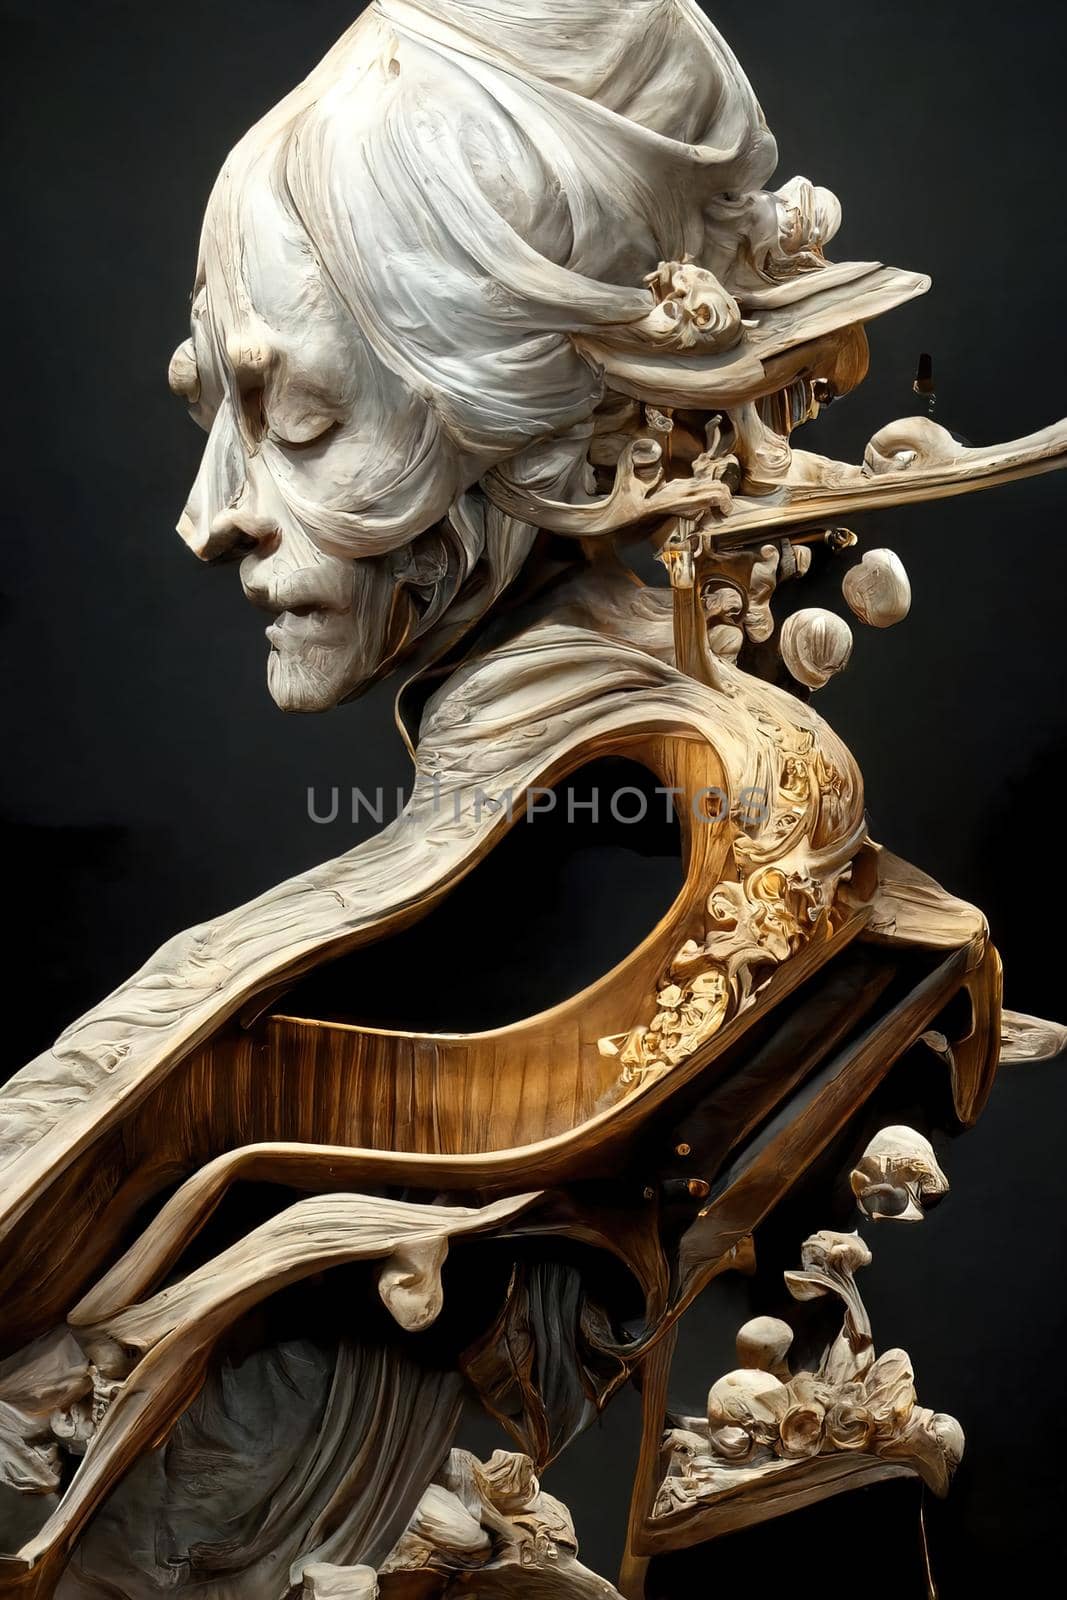 Sculpture of baroque piano, 3d render by Farcas